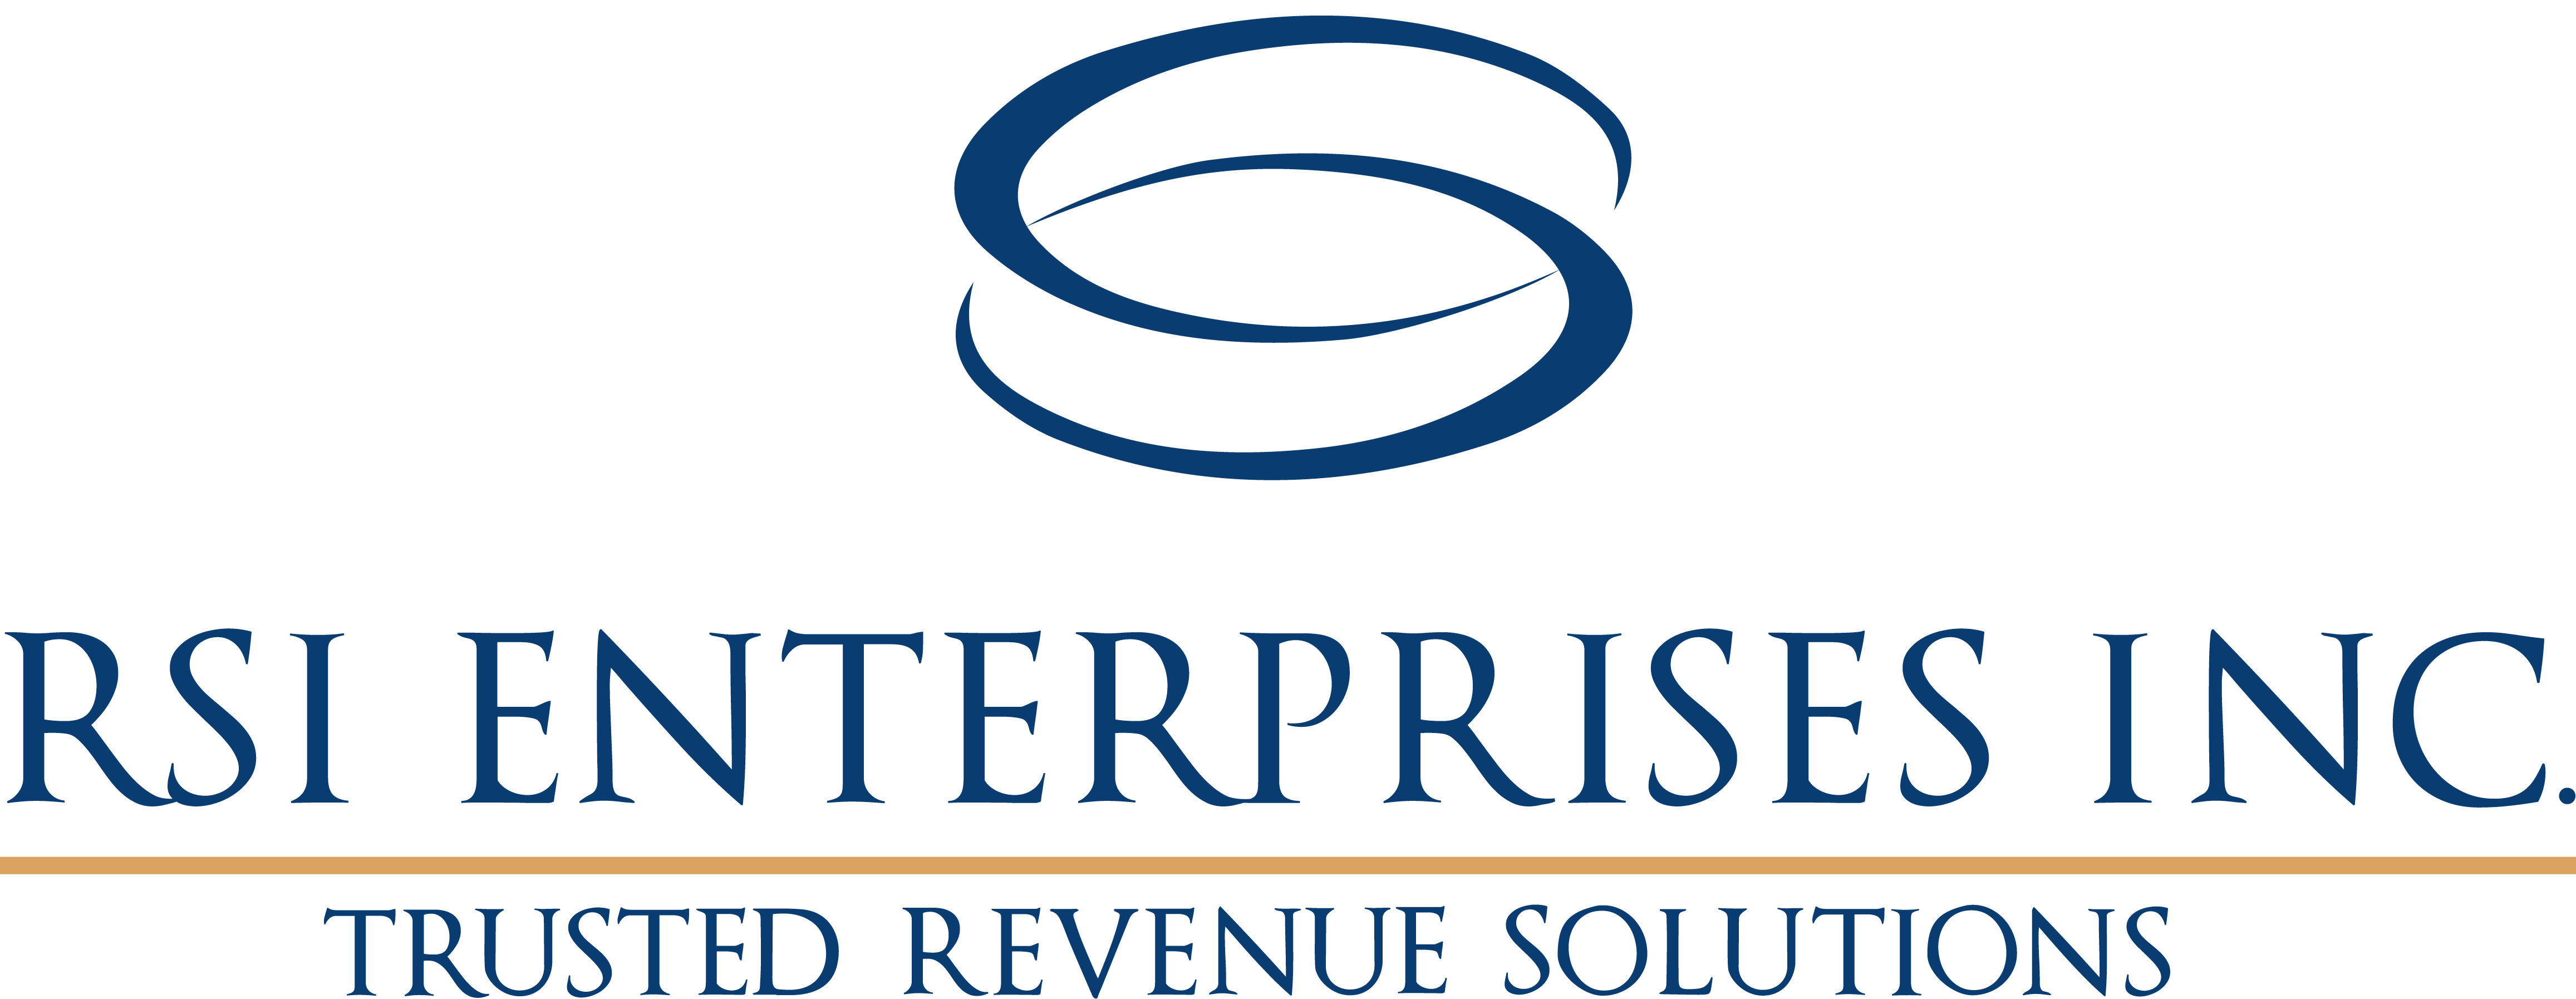 RSI-Enterprises-Inc